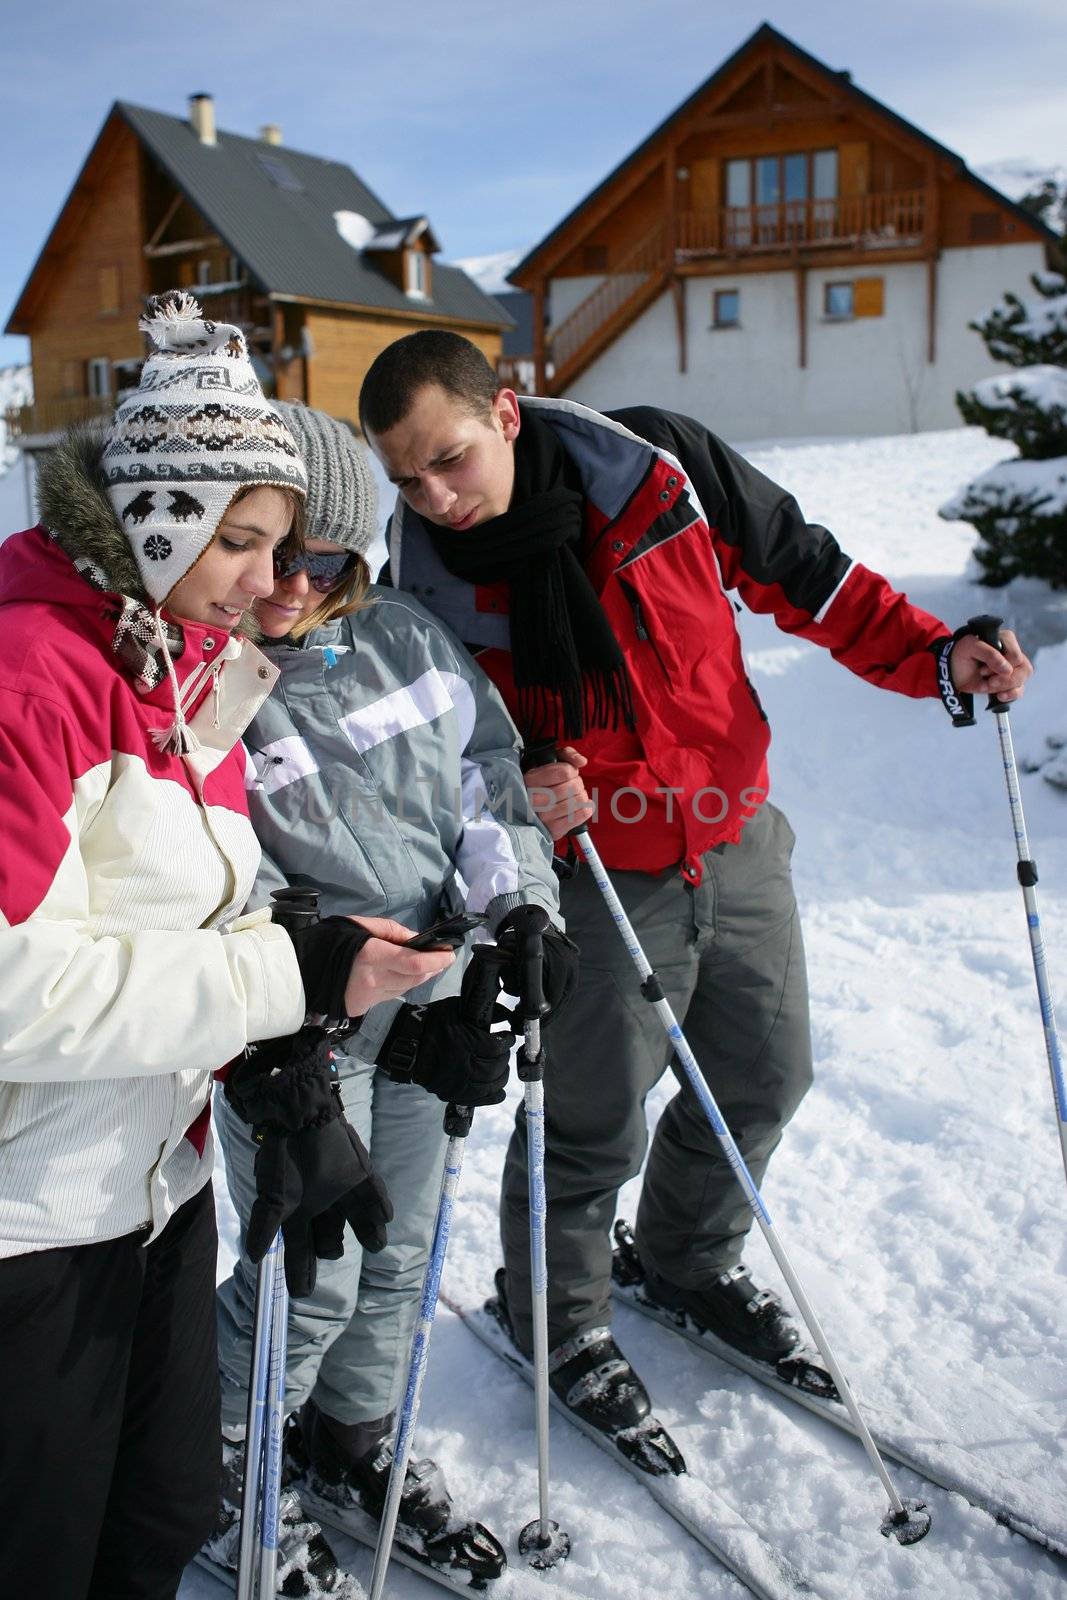 Ski teenagers looking at a phone